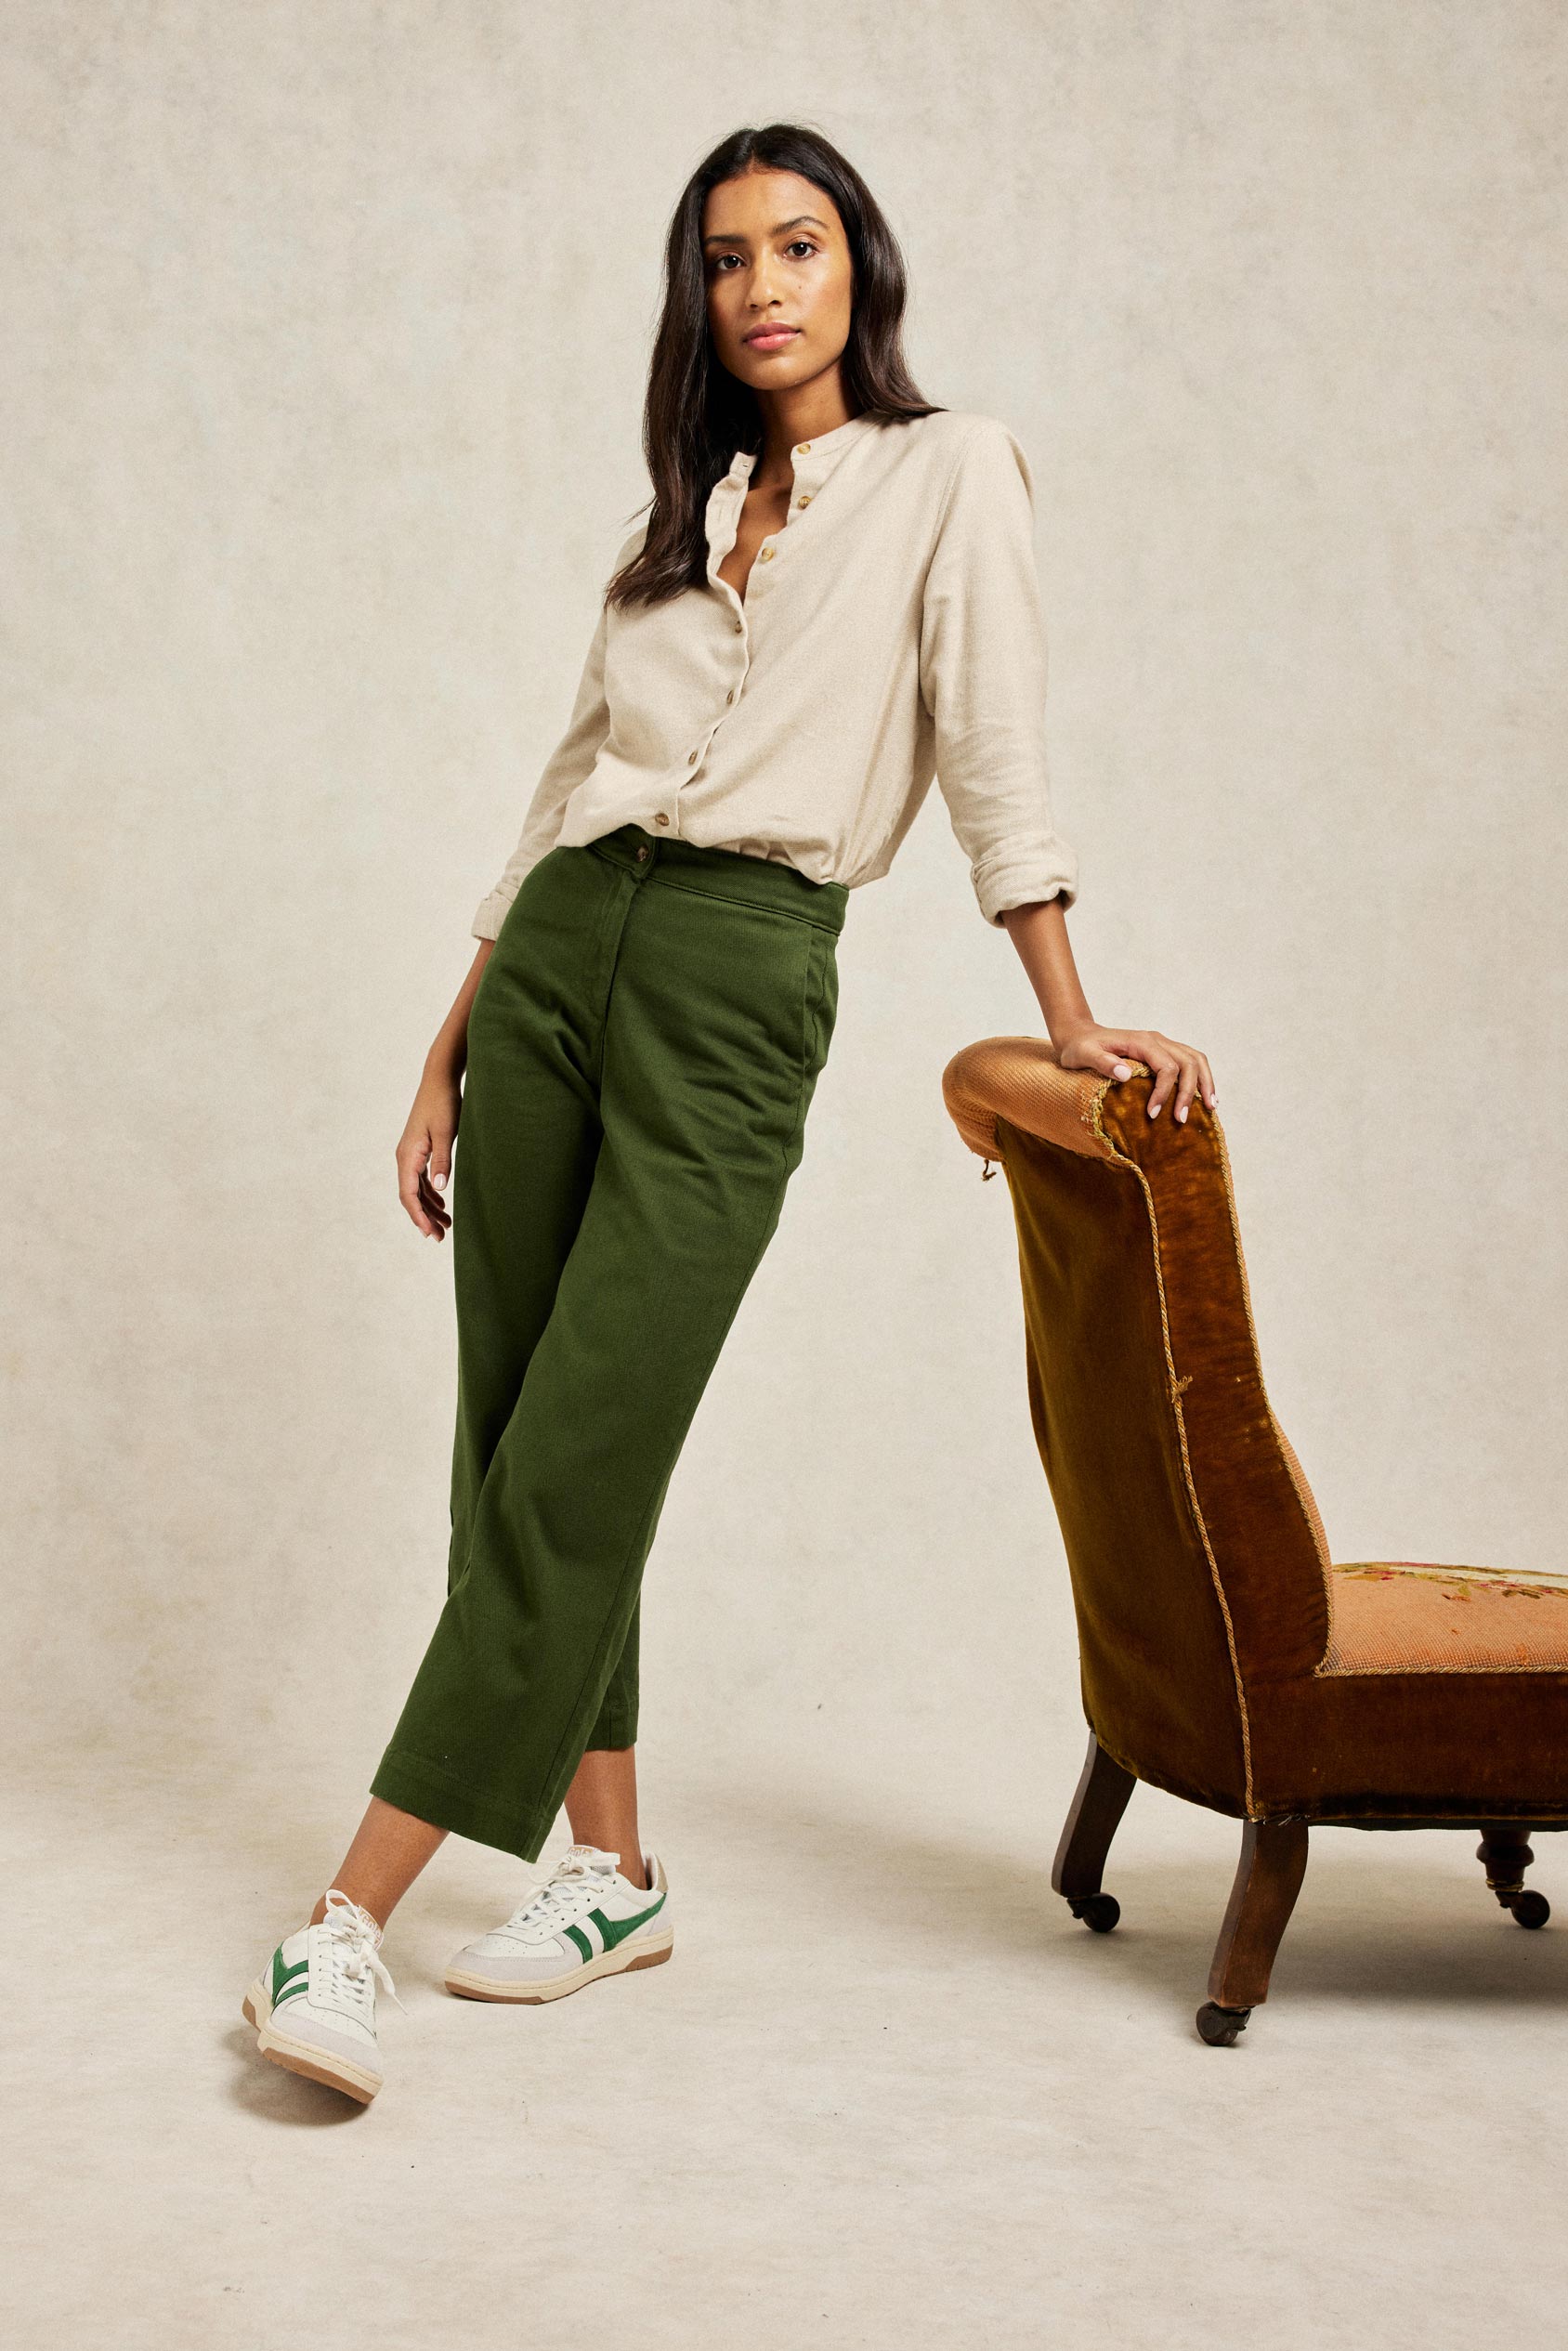 Dress Pants - Dark khaki green - Ladies | H&M US